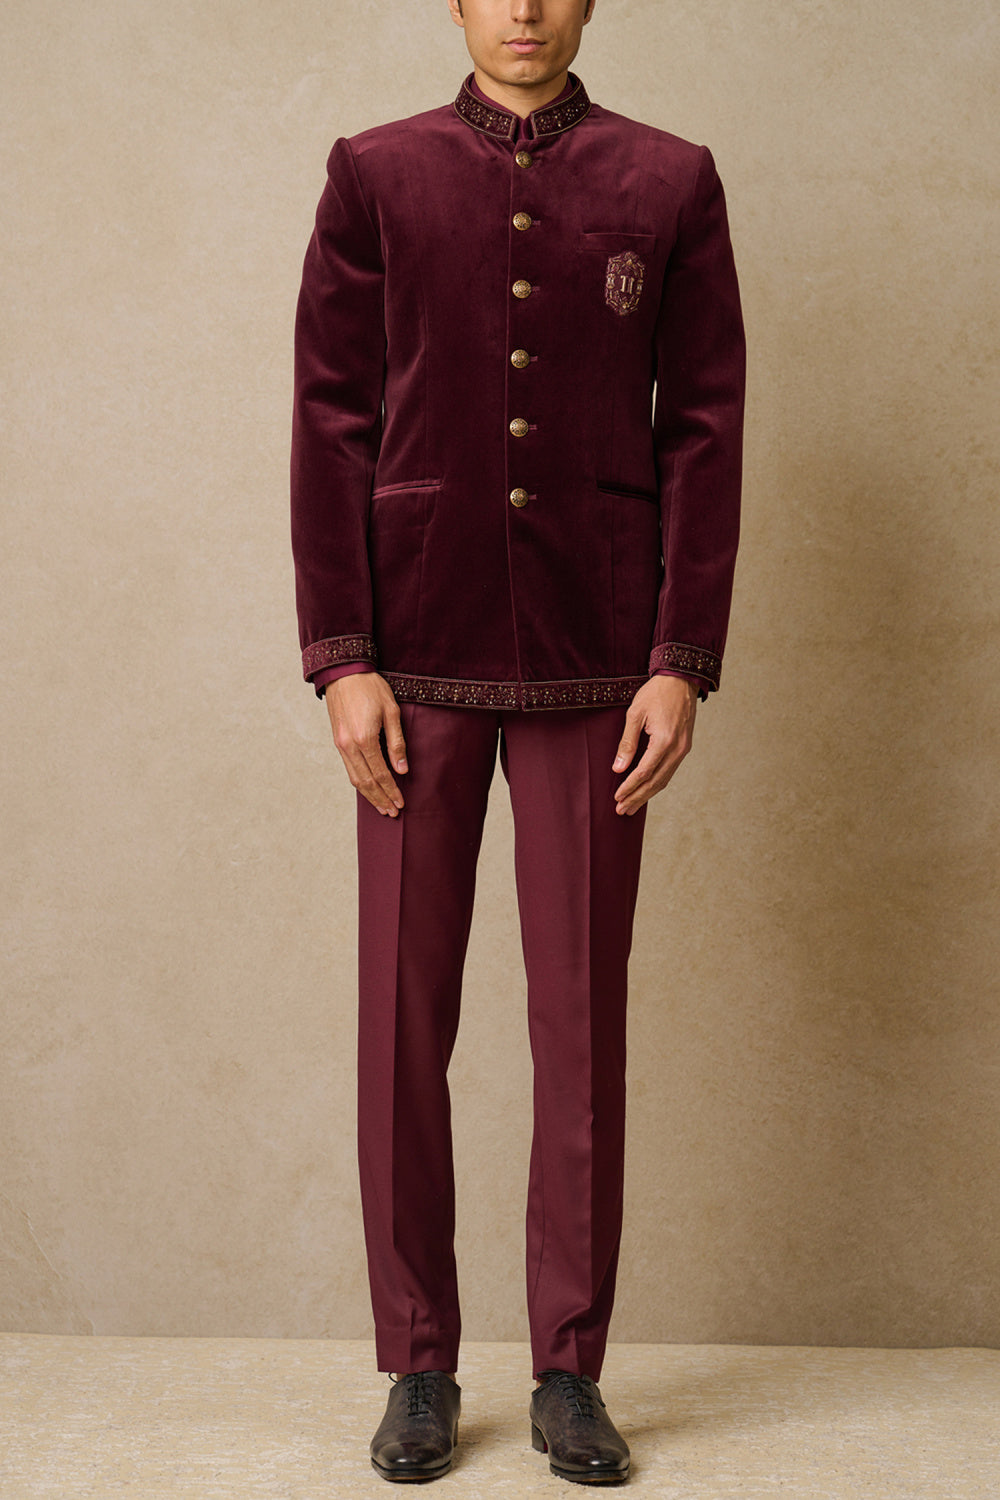 Prince Coat - MC 107 Men's Fashion in Wine Embroidered Velvet